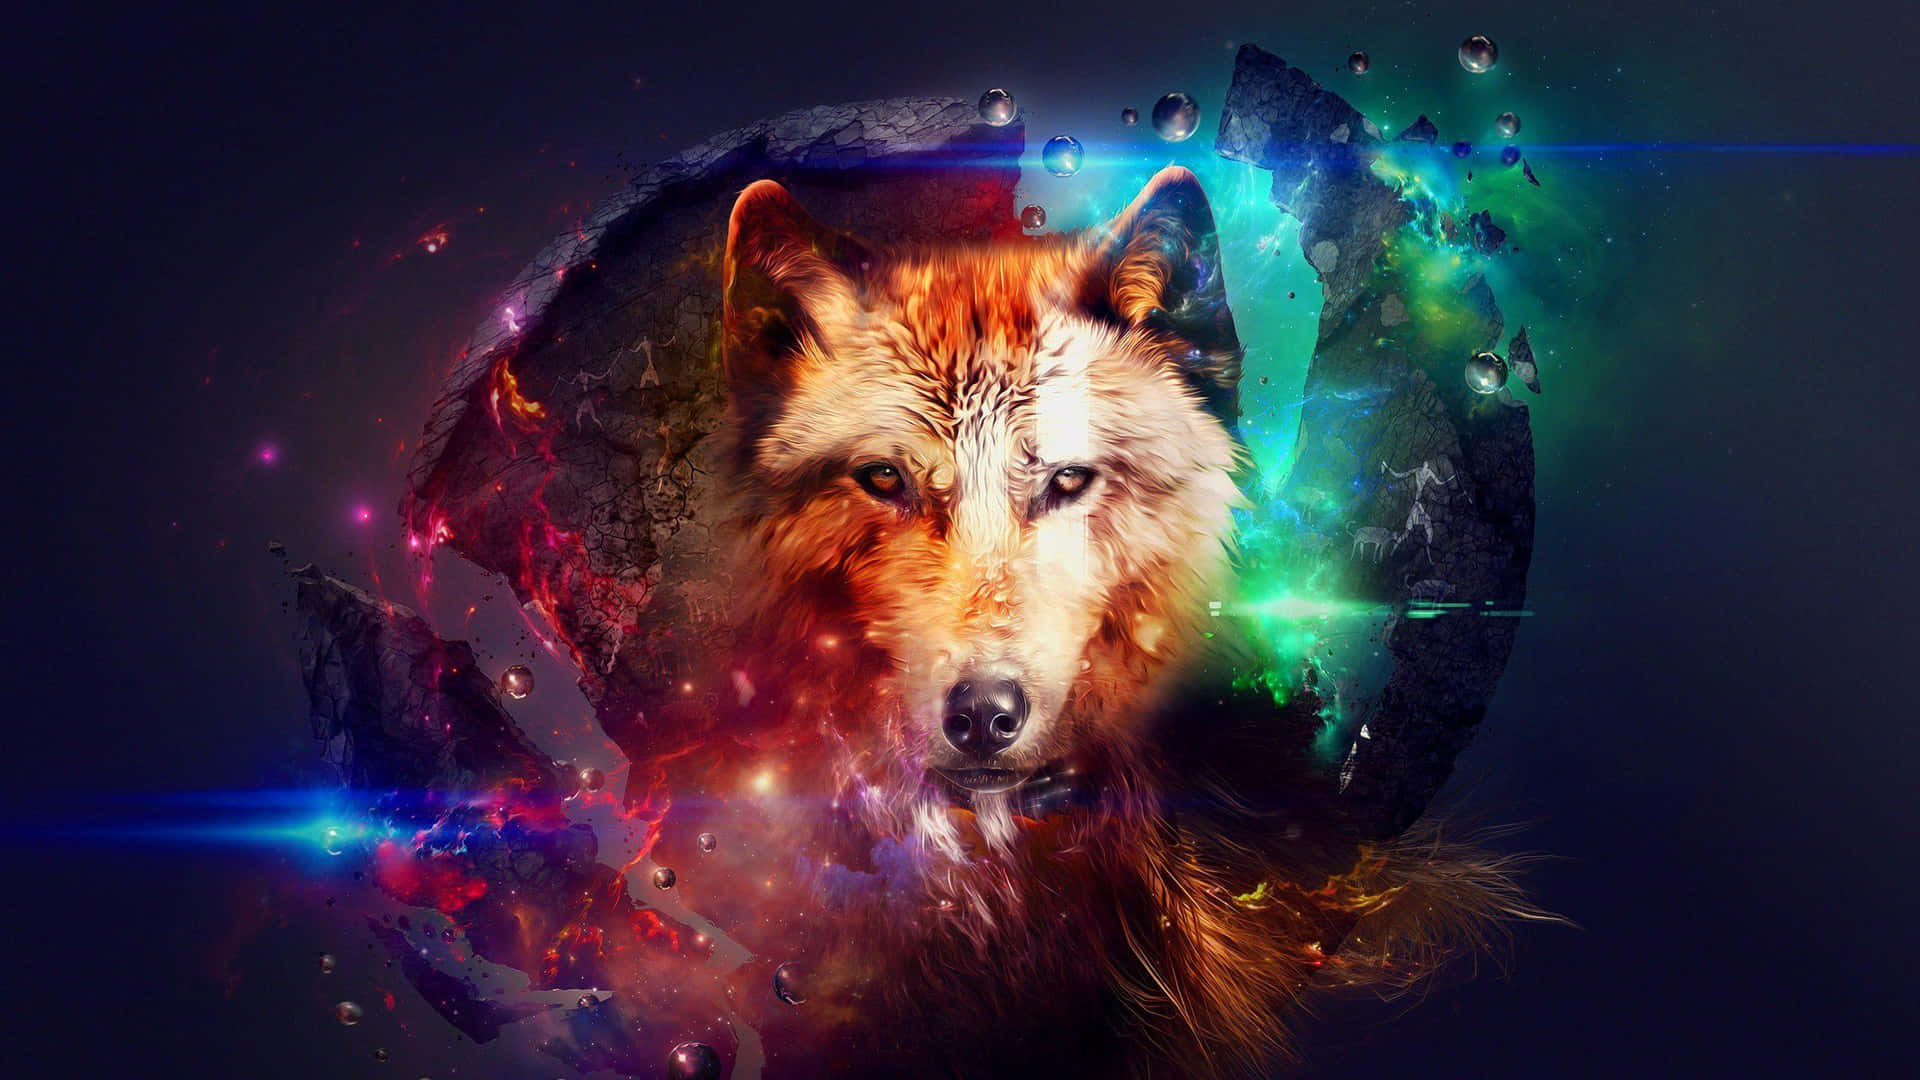 Majestic 3D Wolf in a Mystical Landscape Wallpaper